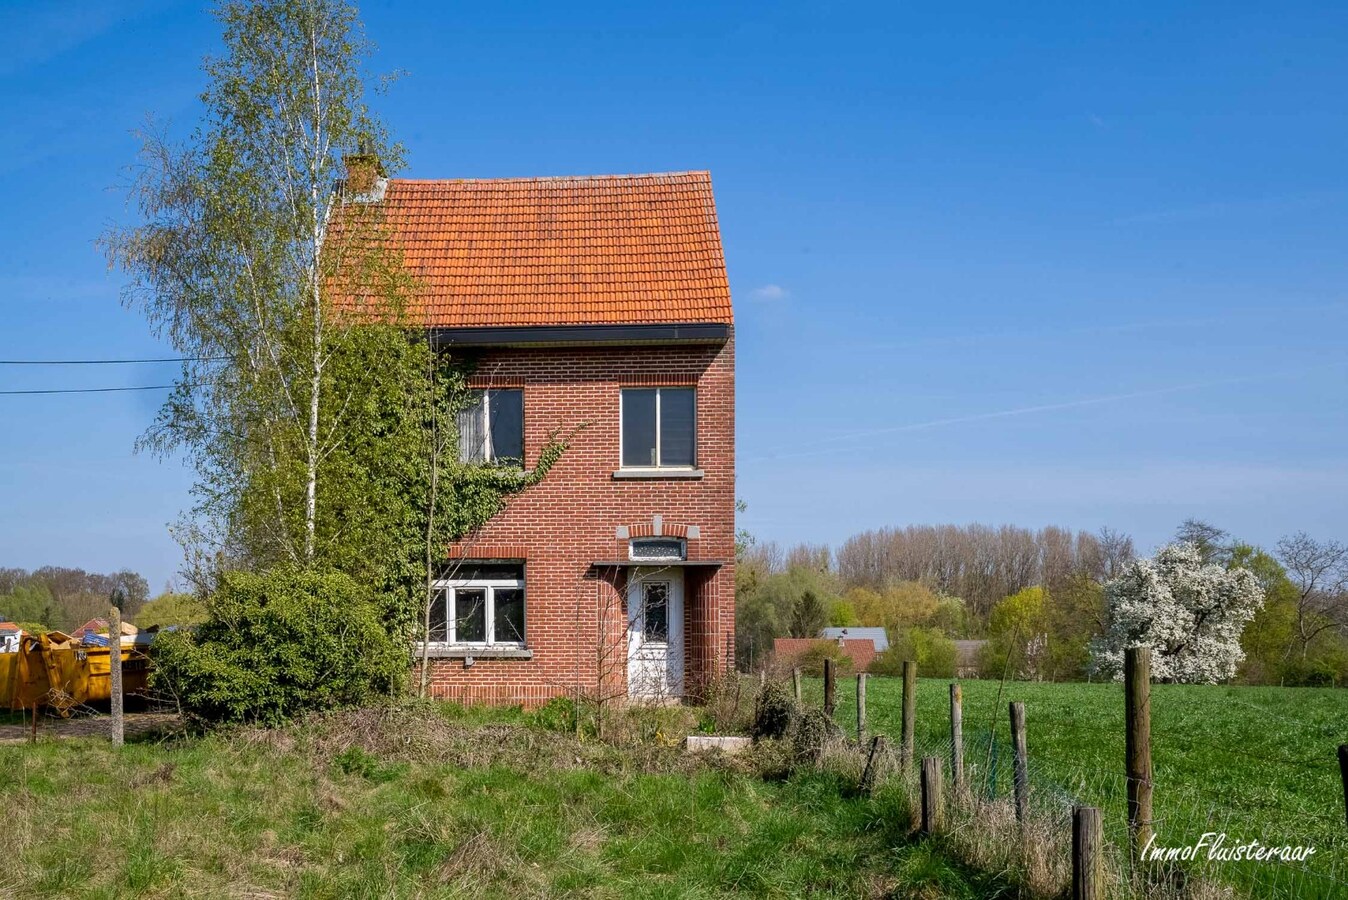 Property sold in Tielt-Winge